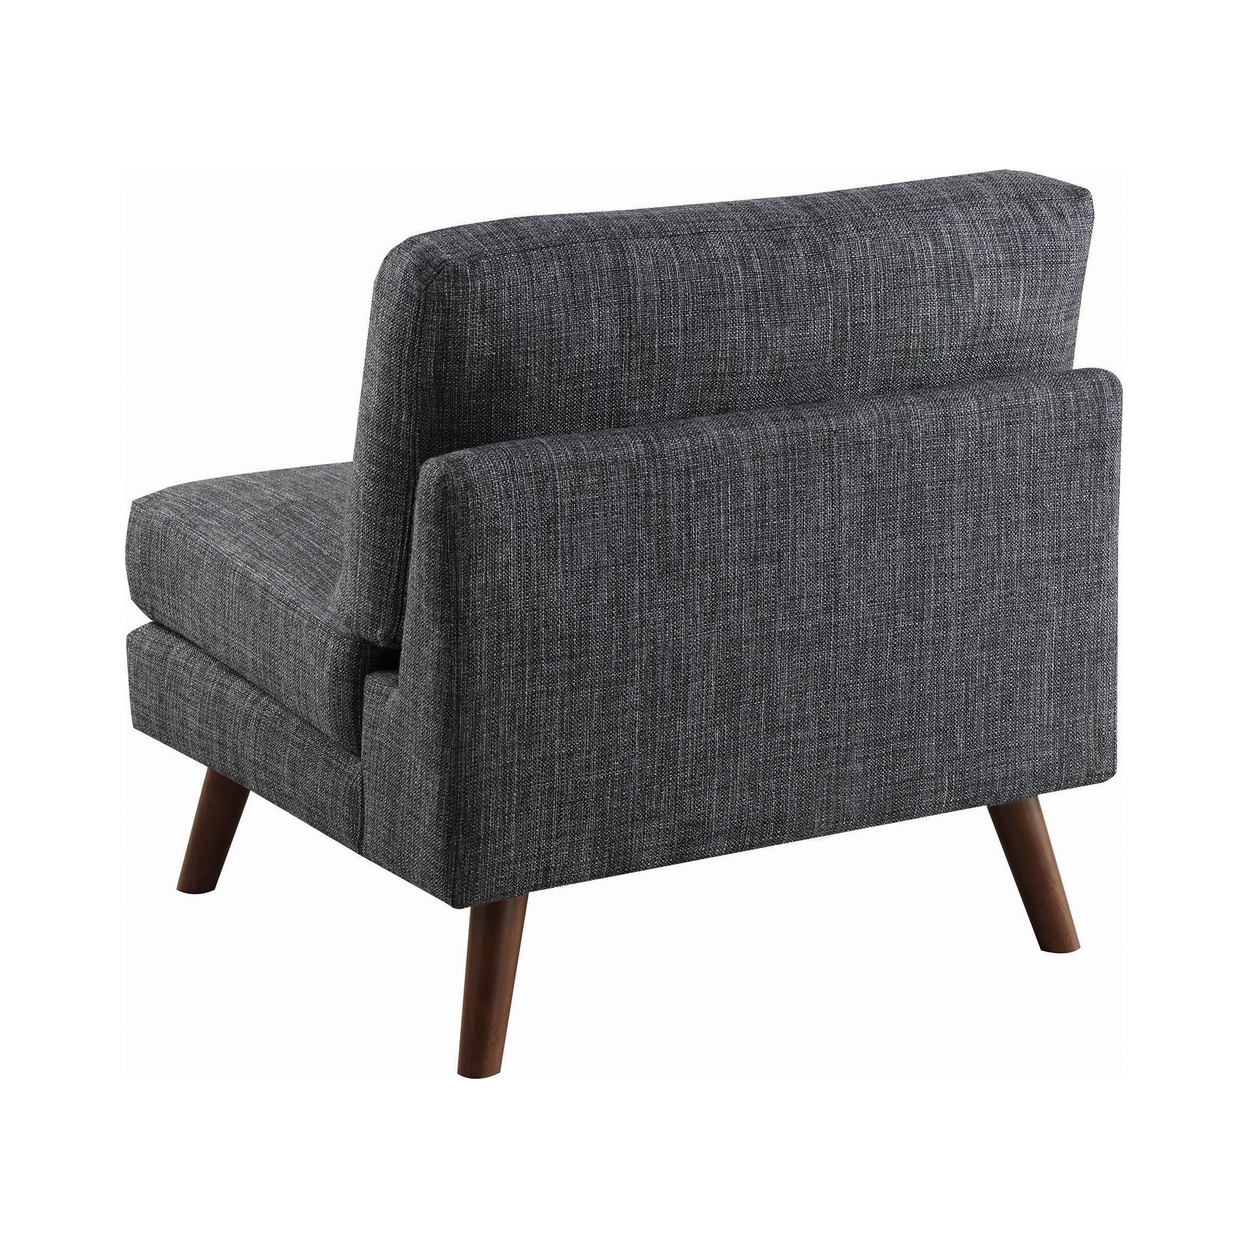 Mid Century Style Fabric Armless Chair With Splayed Legs, Dark Gray- Saltoro Sherpi